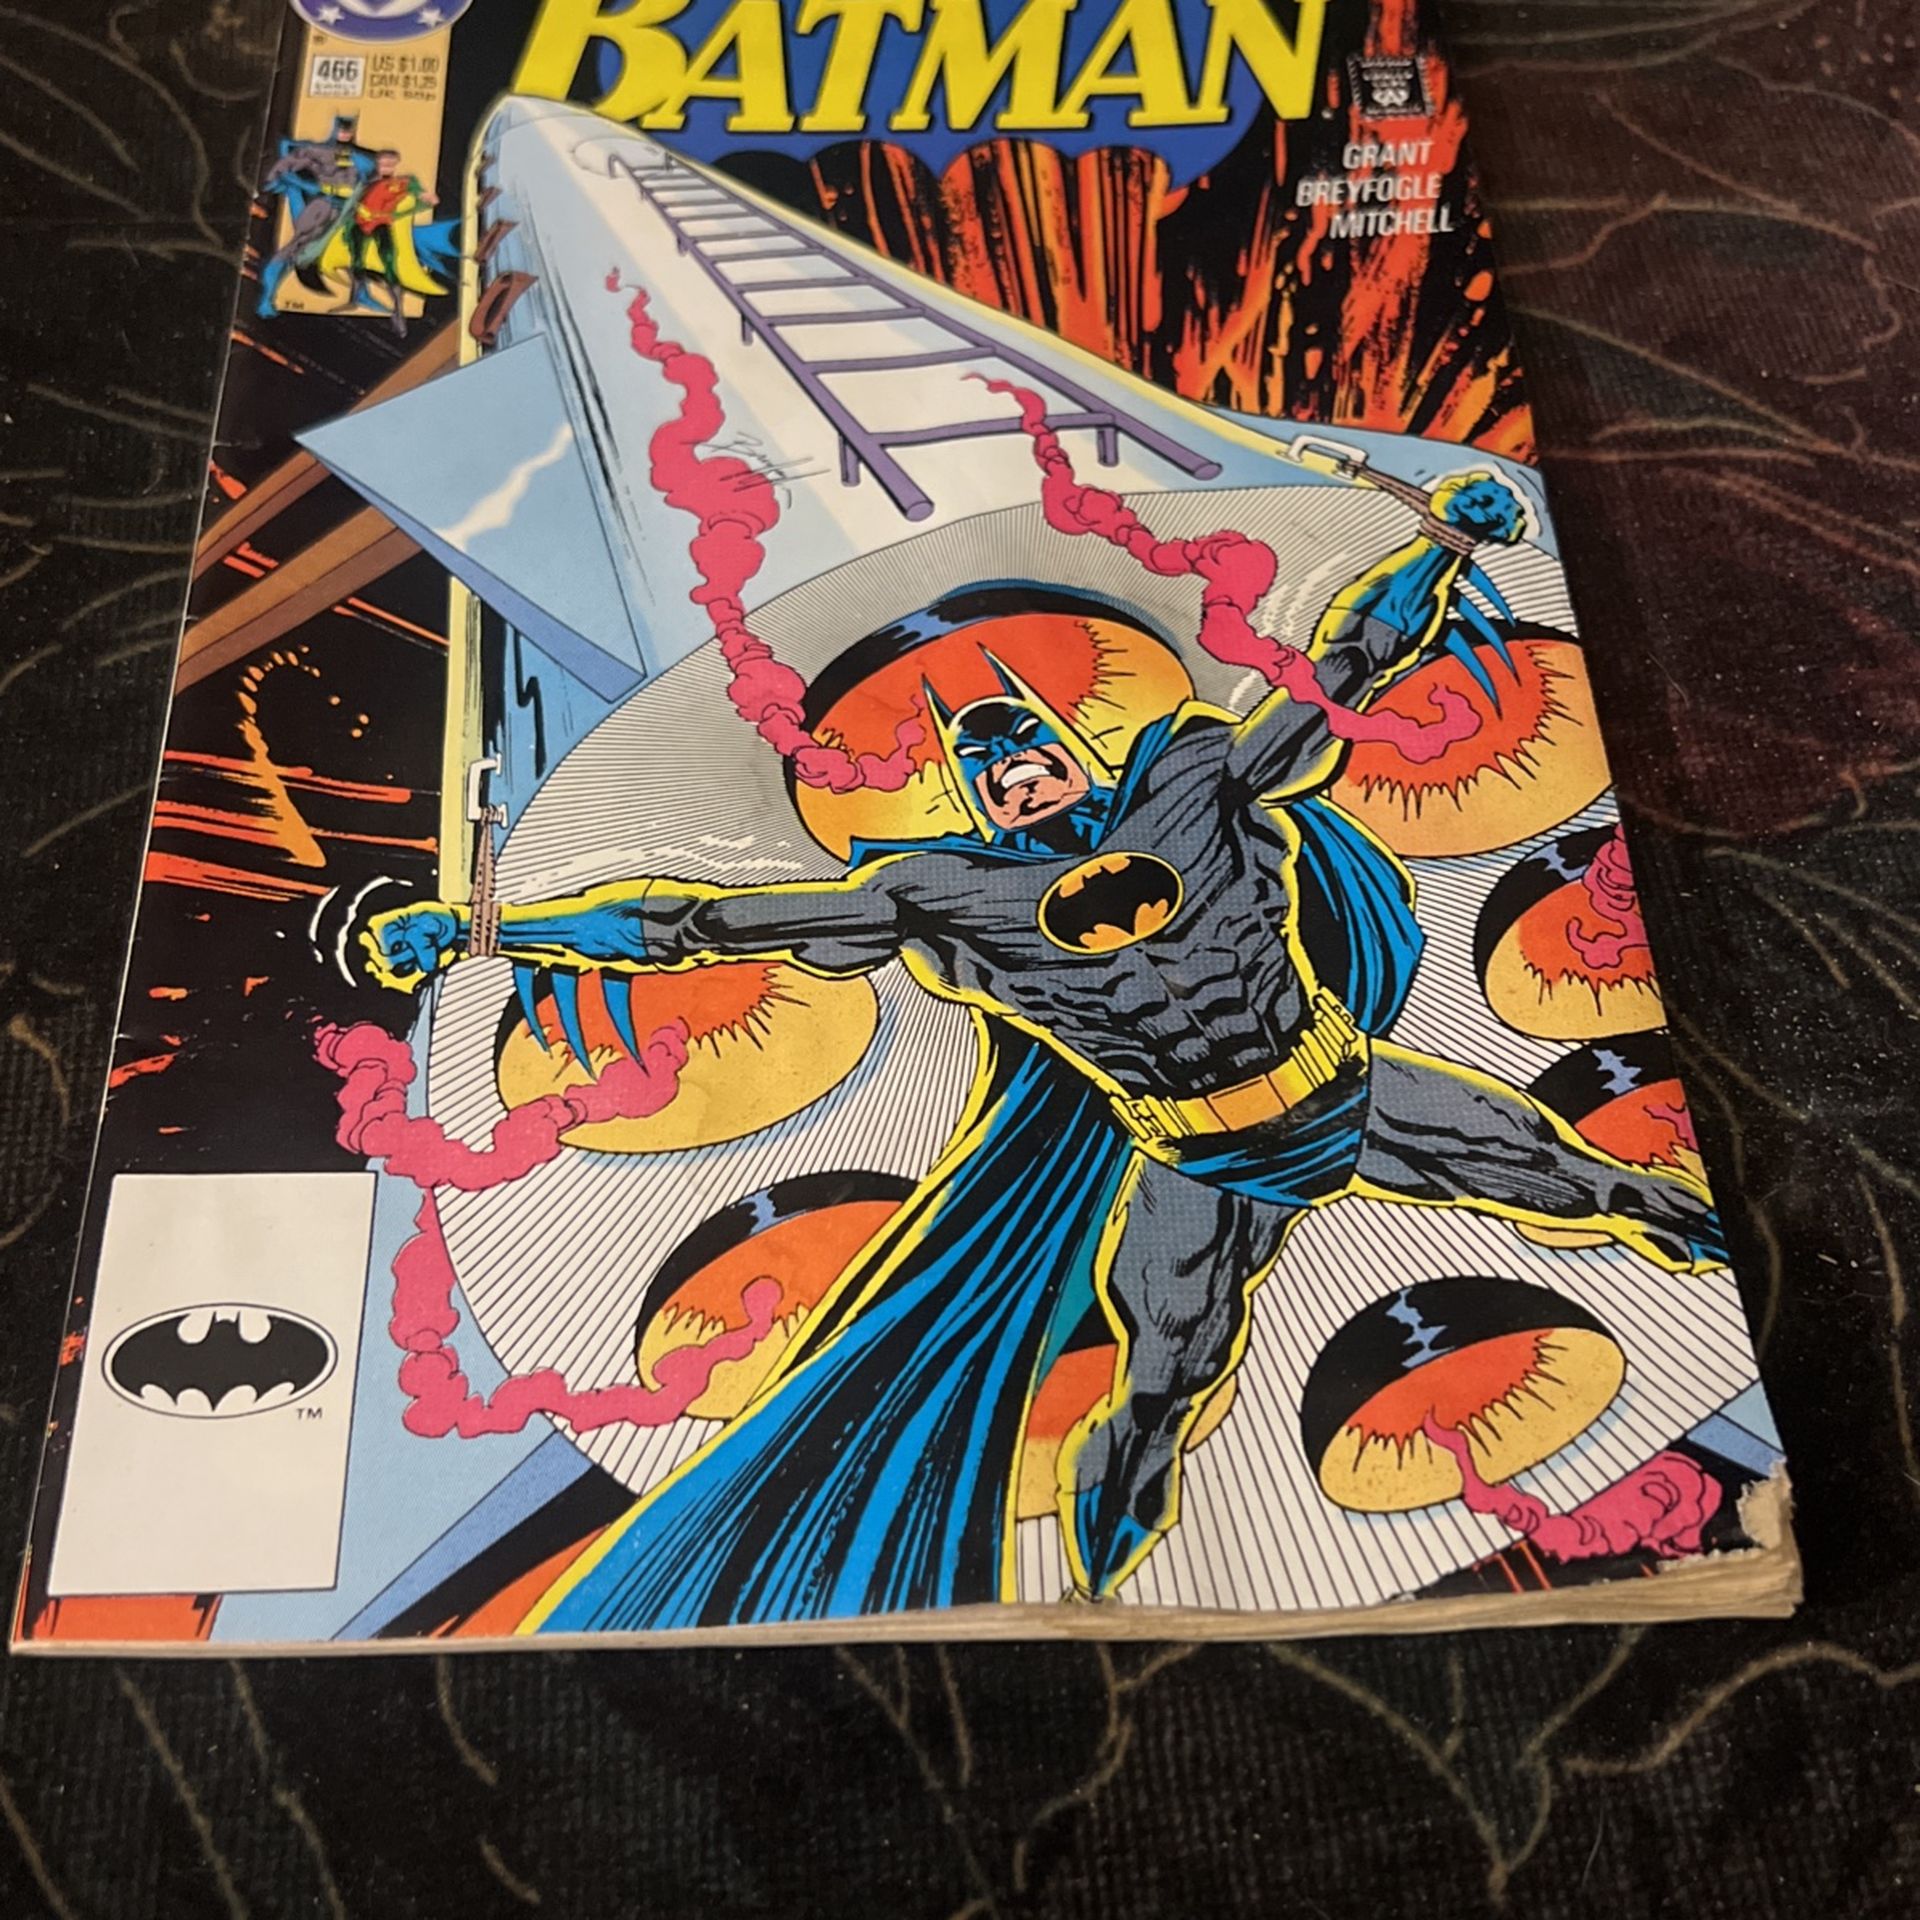 BATMAN # 466, AUG. 1991,